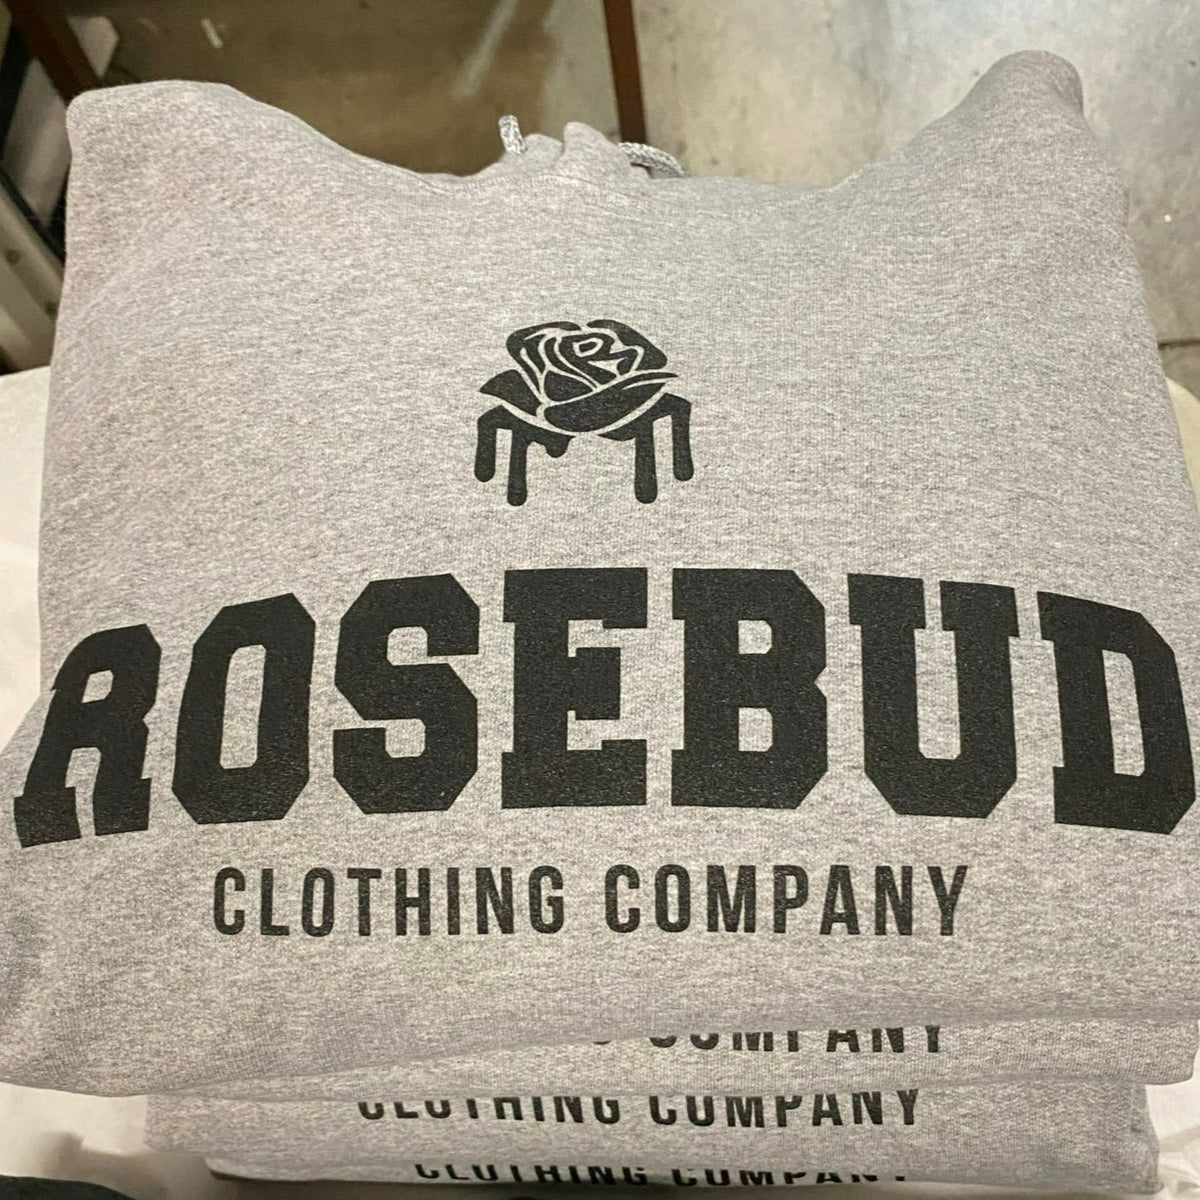 Rosebud Clothing Company